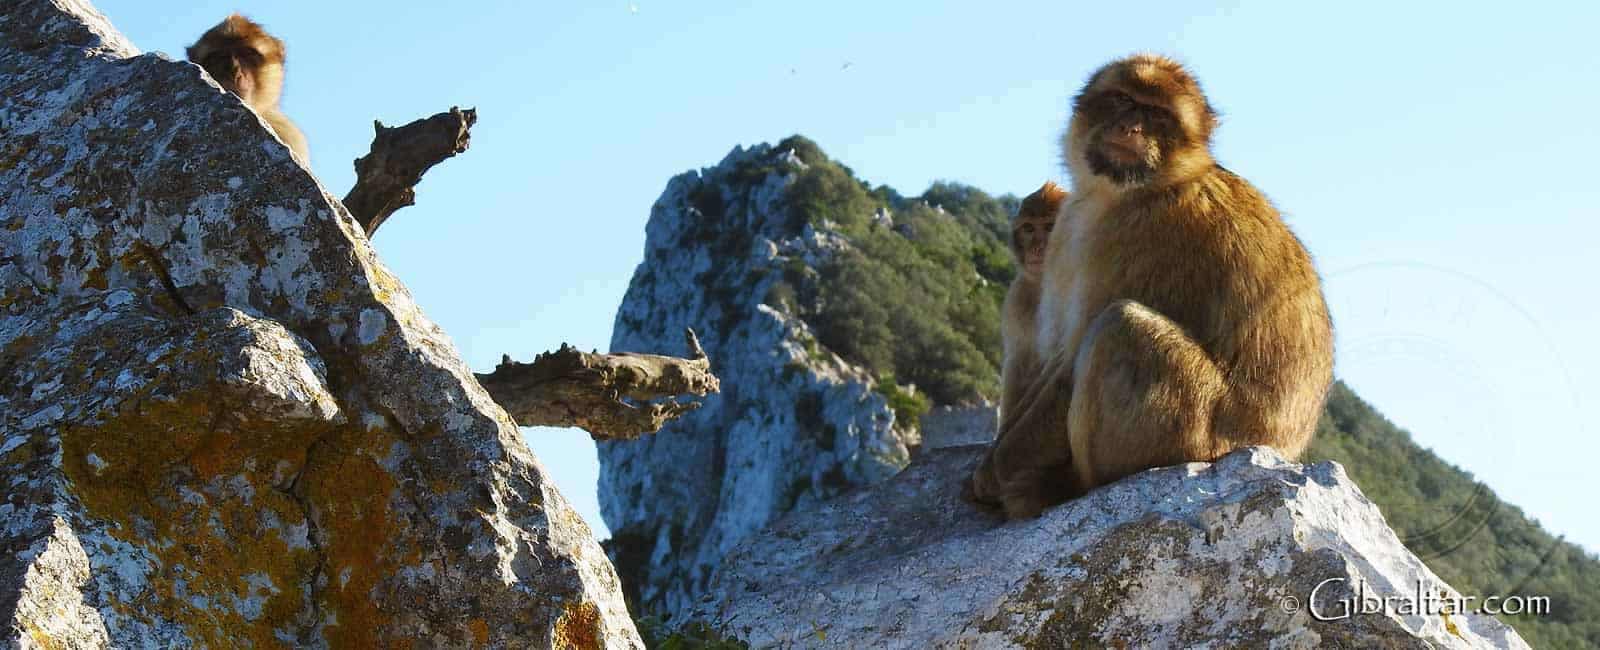 Gibraltar the-upper-rock-nature-reserve-monkeys